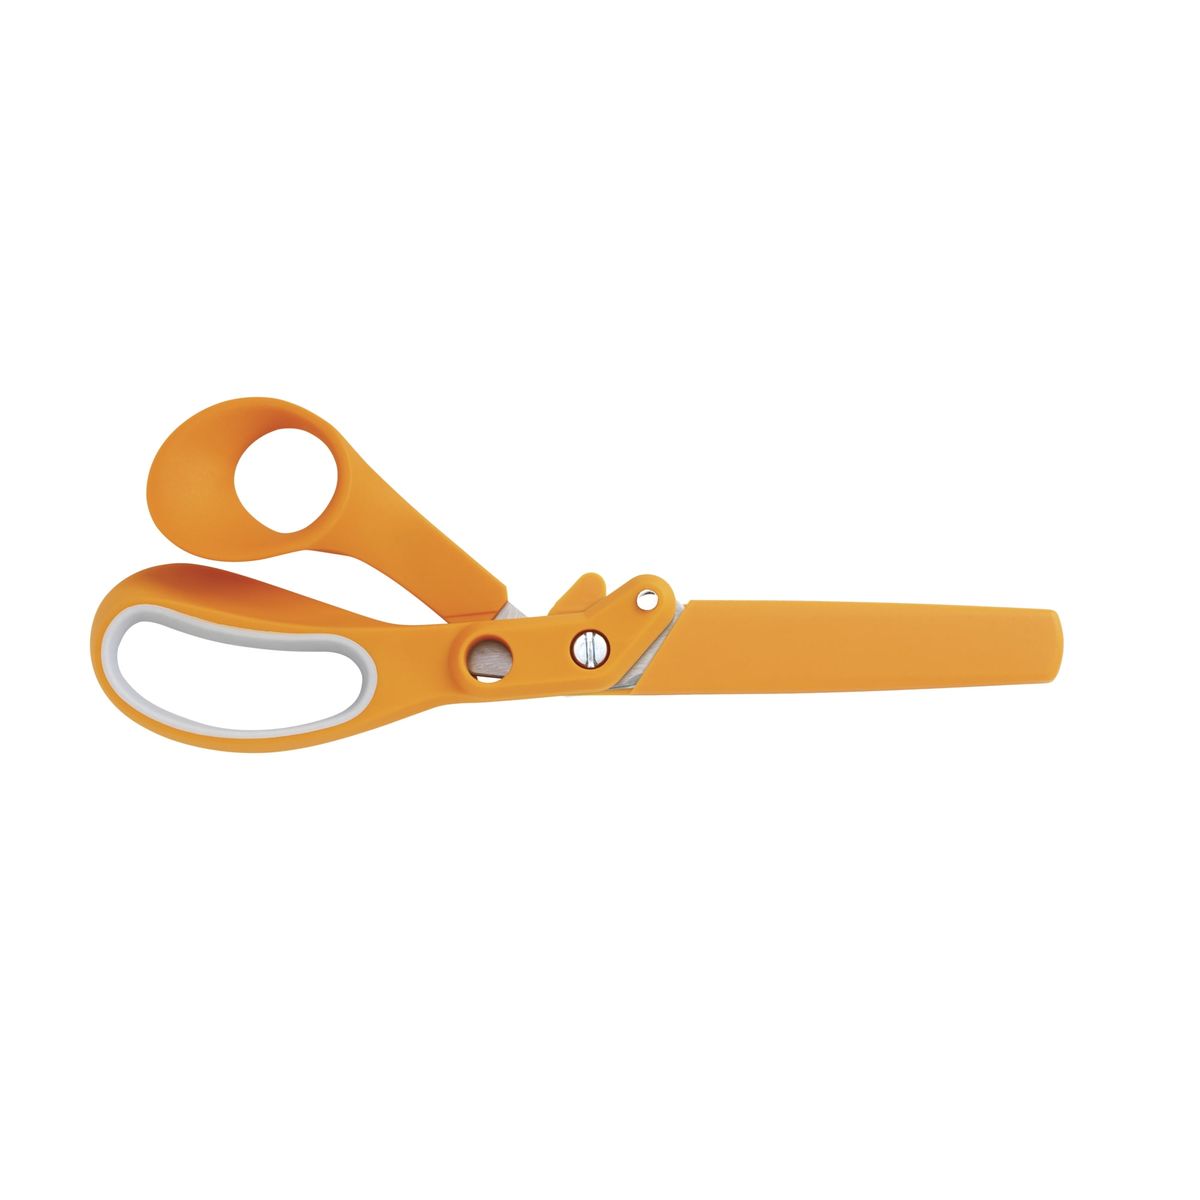 [RDY] [送料無料] Fiskars アンプリファイ カミソリ刃鋏 布地用鋏 オレンジ 各1個 8インチ [楽天海外通販] | Fiskars Amplify Razor Edge Scissors Fabric Shears, Orange, 1 Each, 8 inch